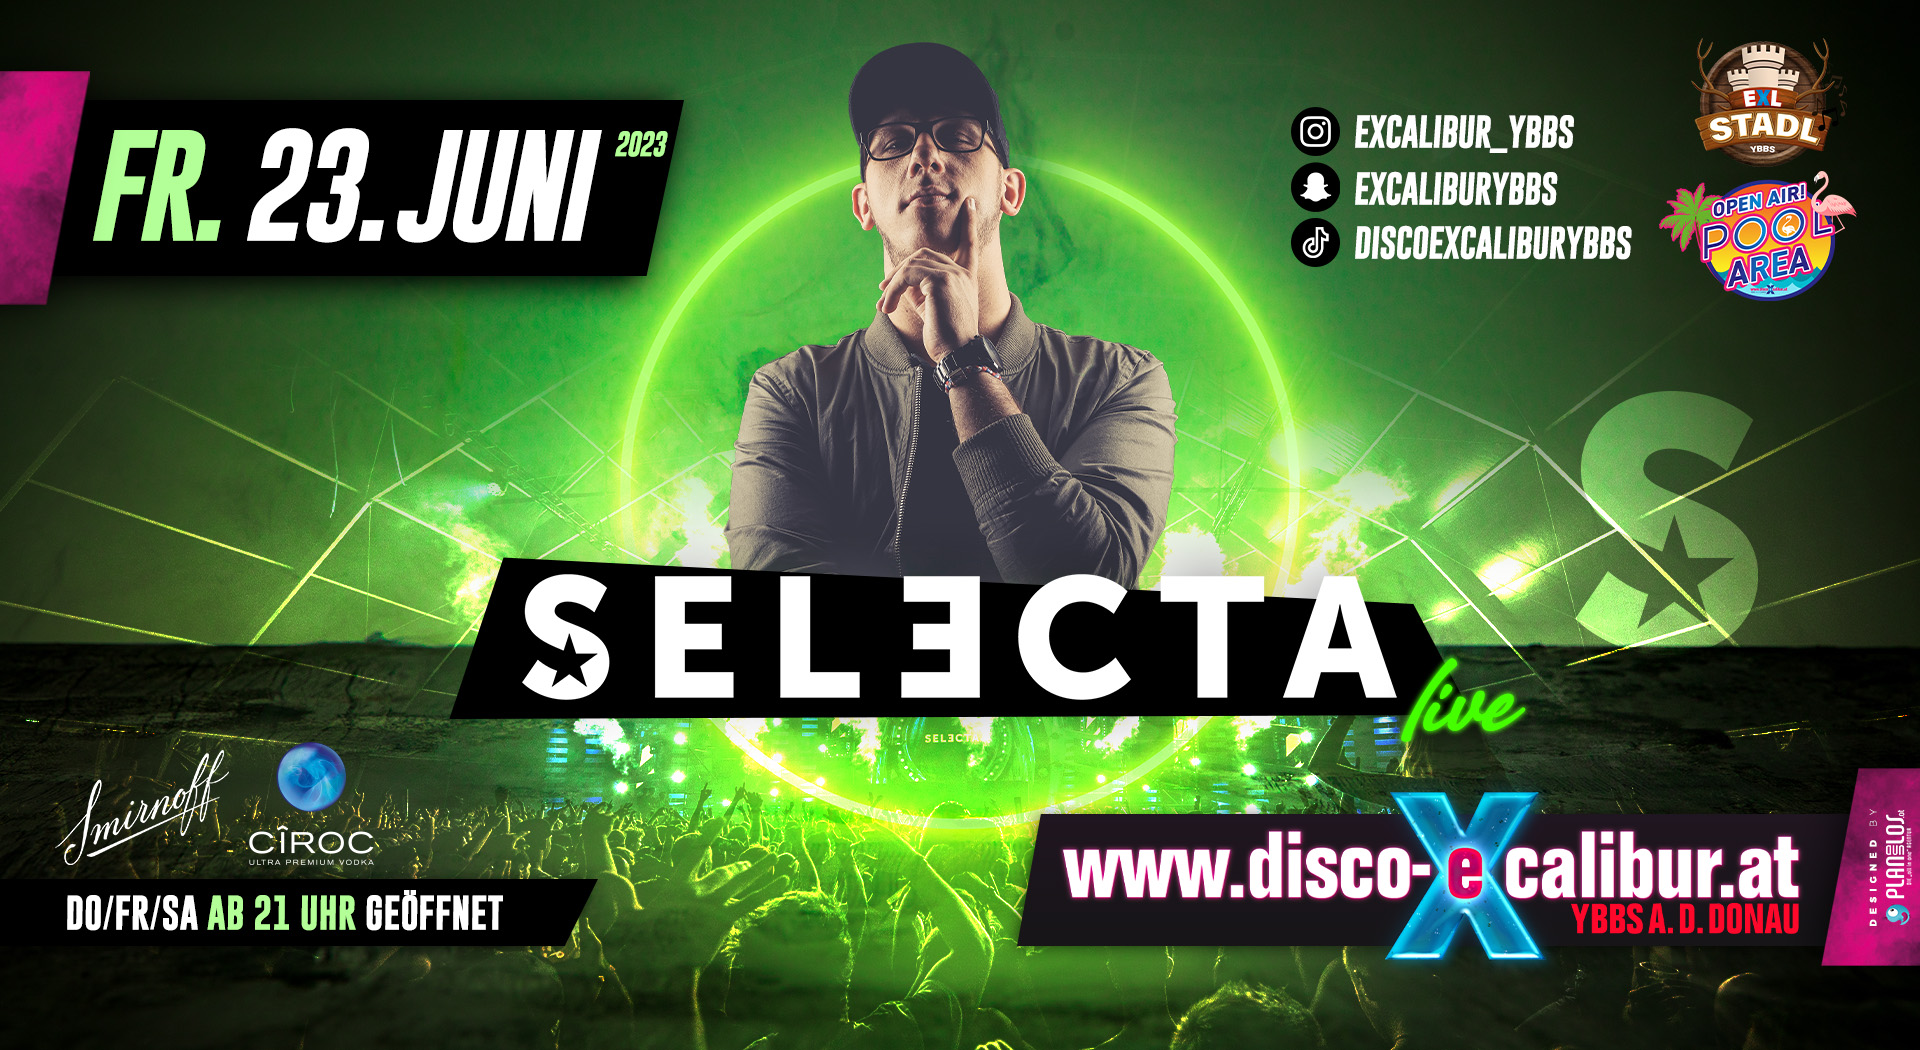 DJ SELECTA Live!